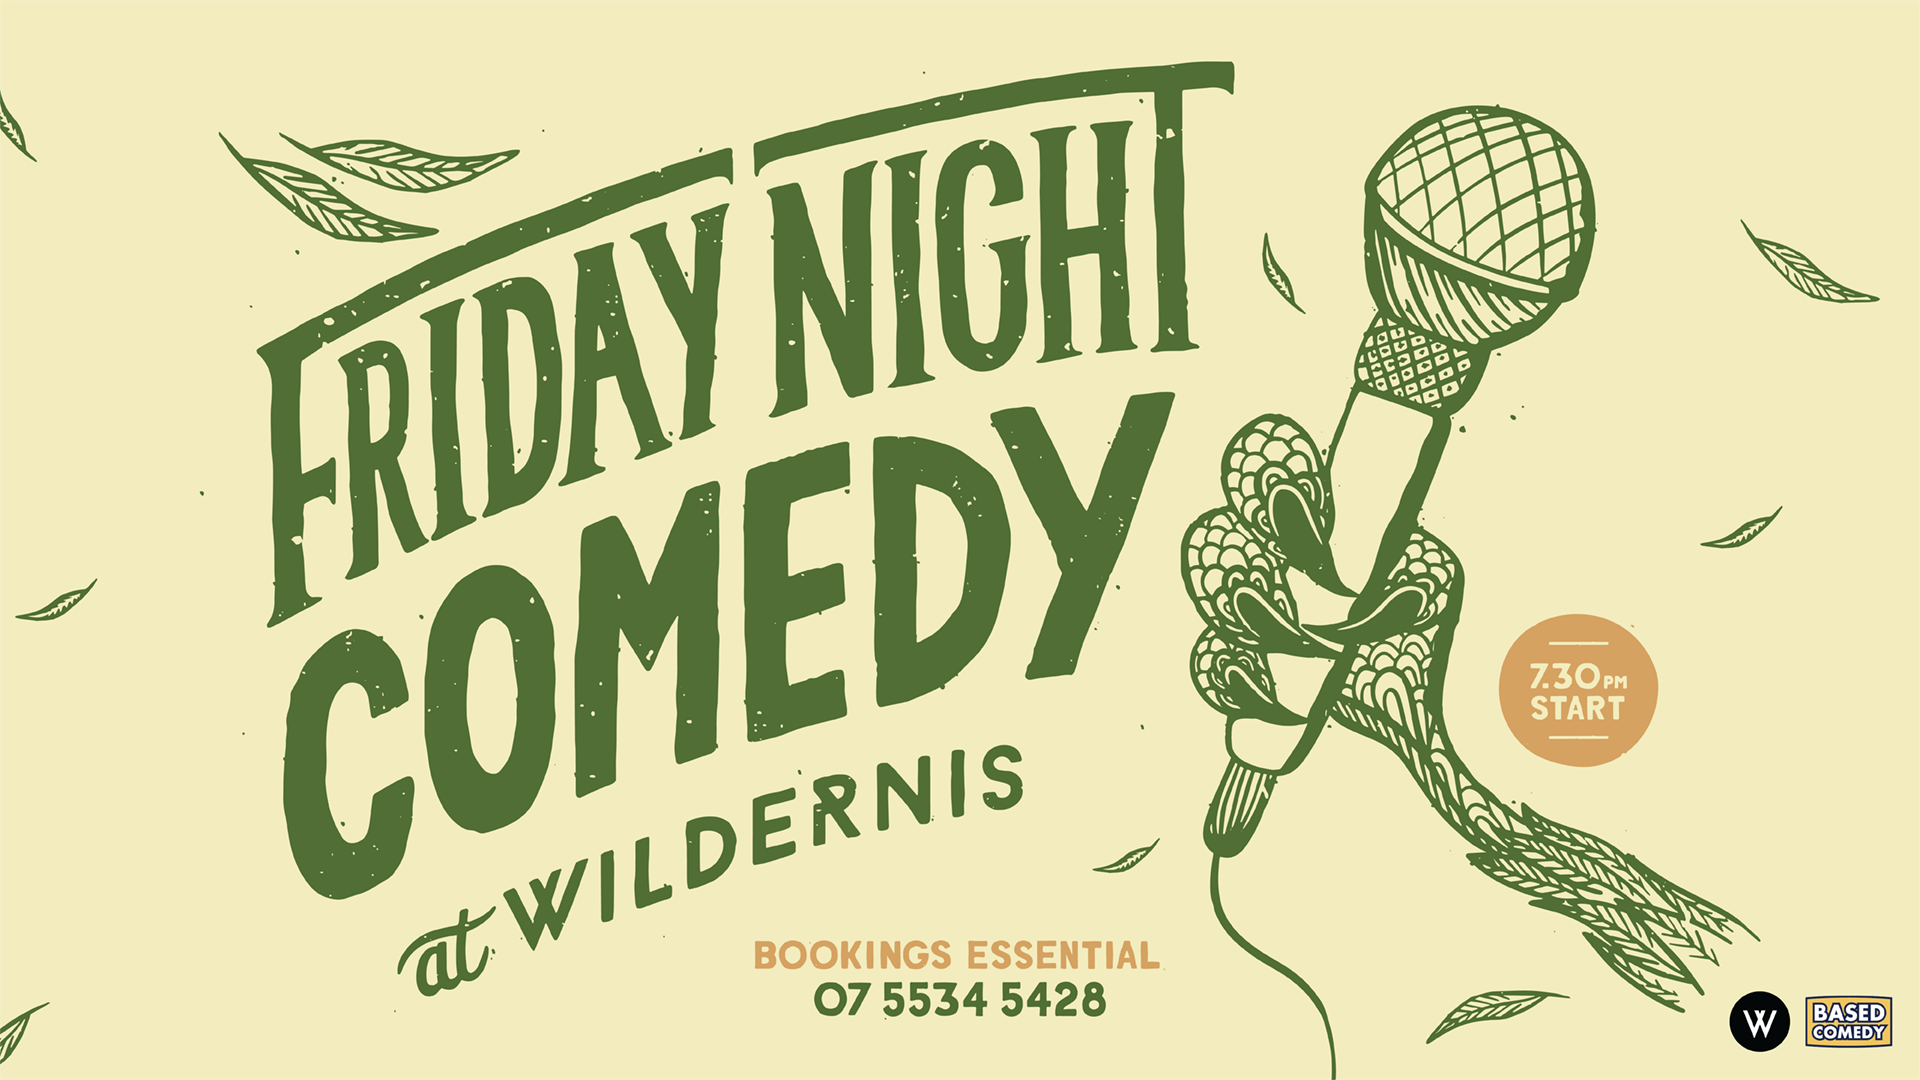 Friday Night Comedy at Wildernis